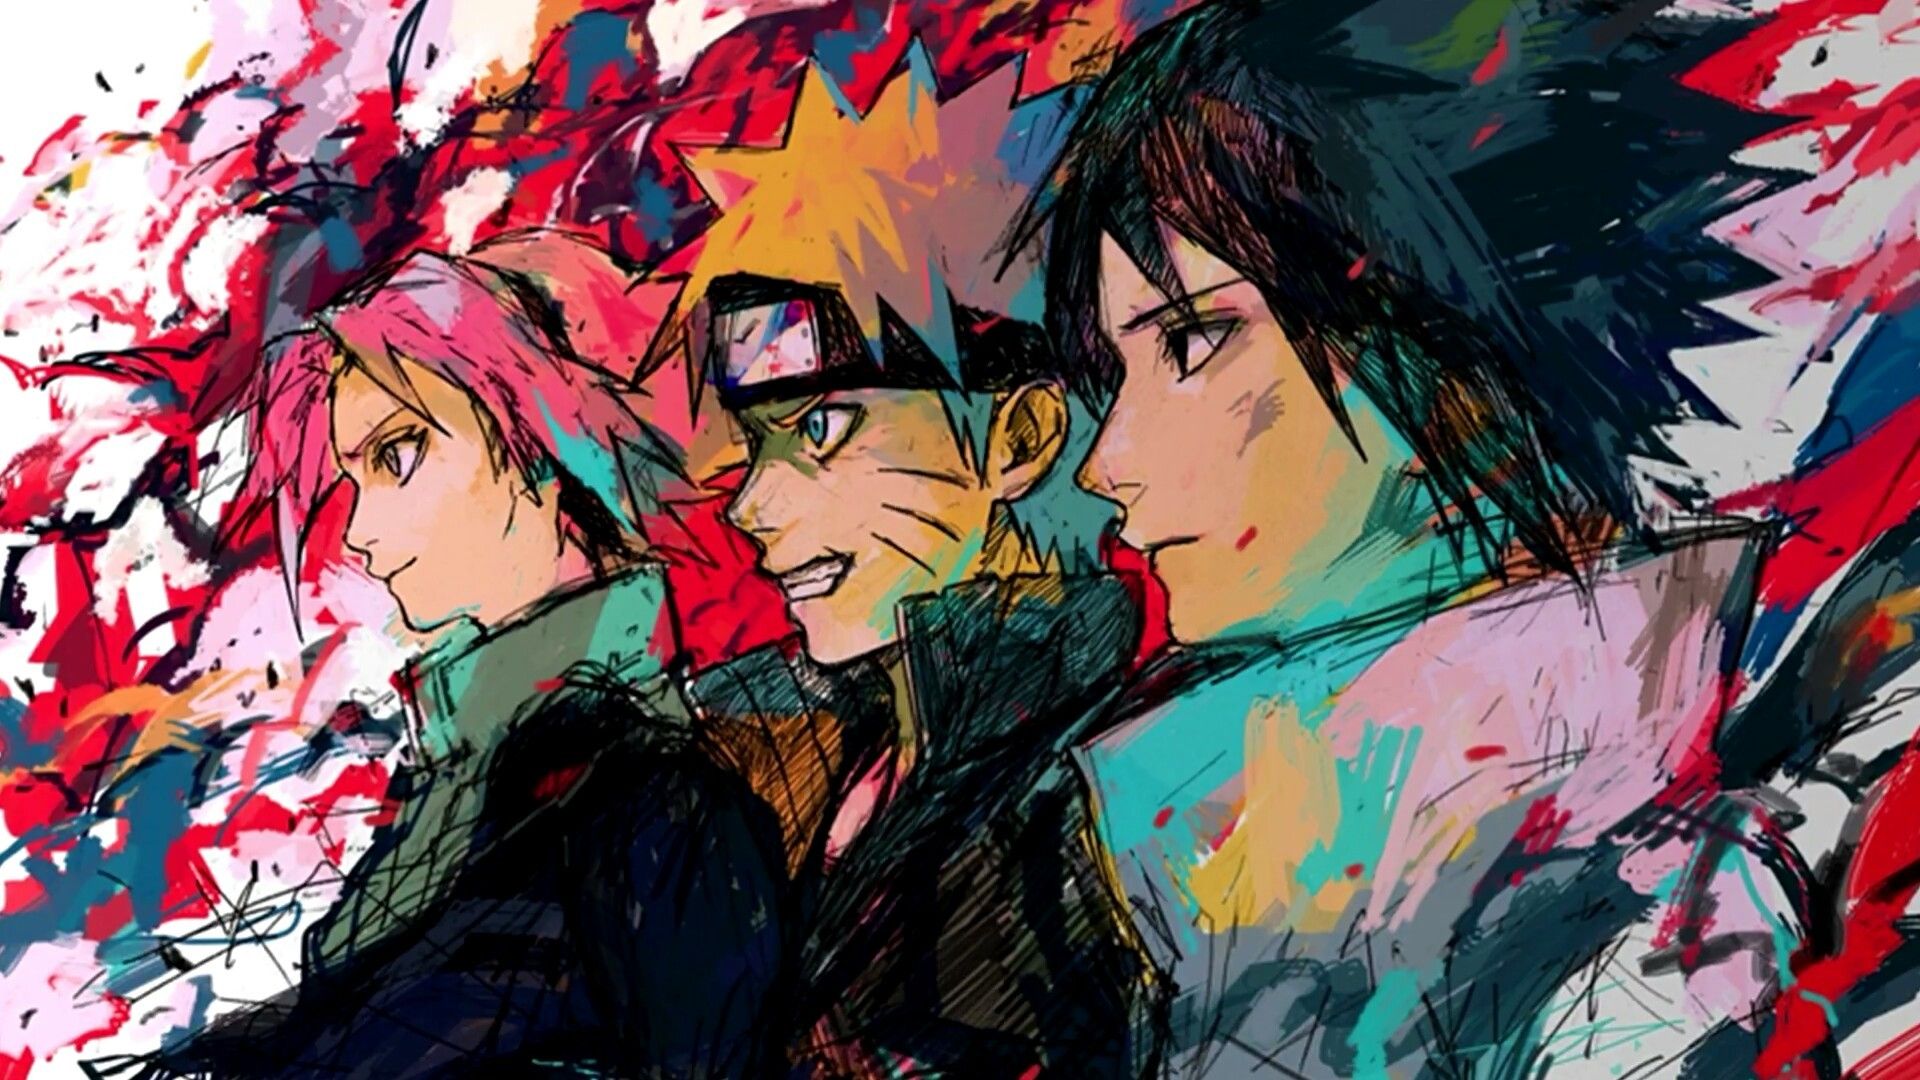 100+] Naruto Manga Wallpapers